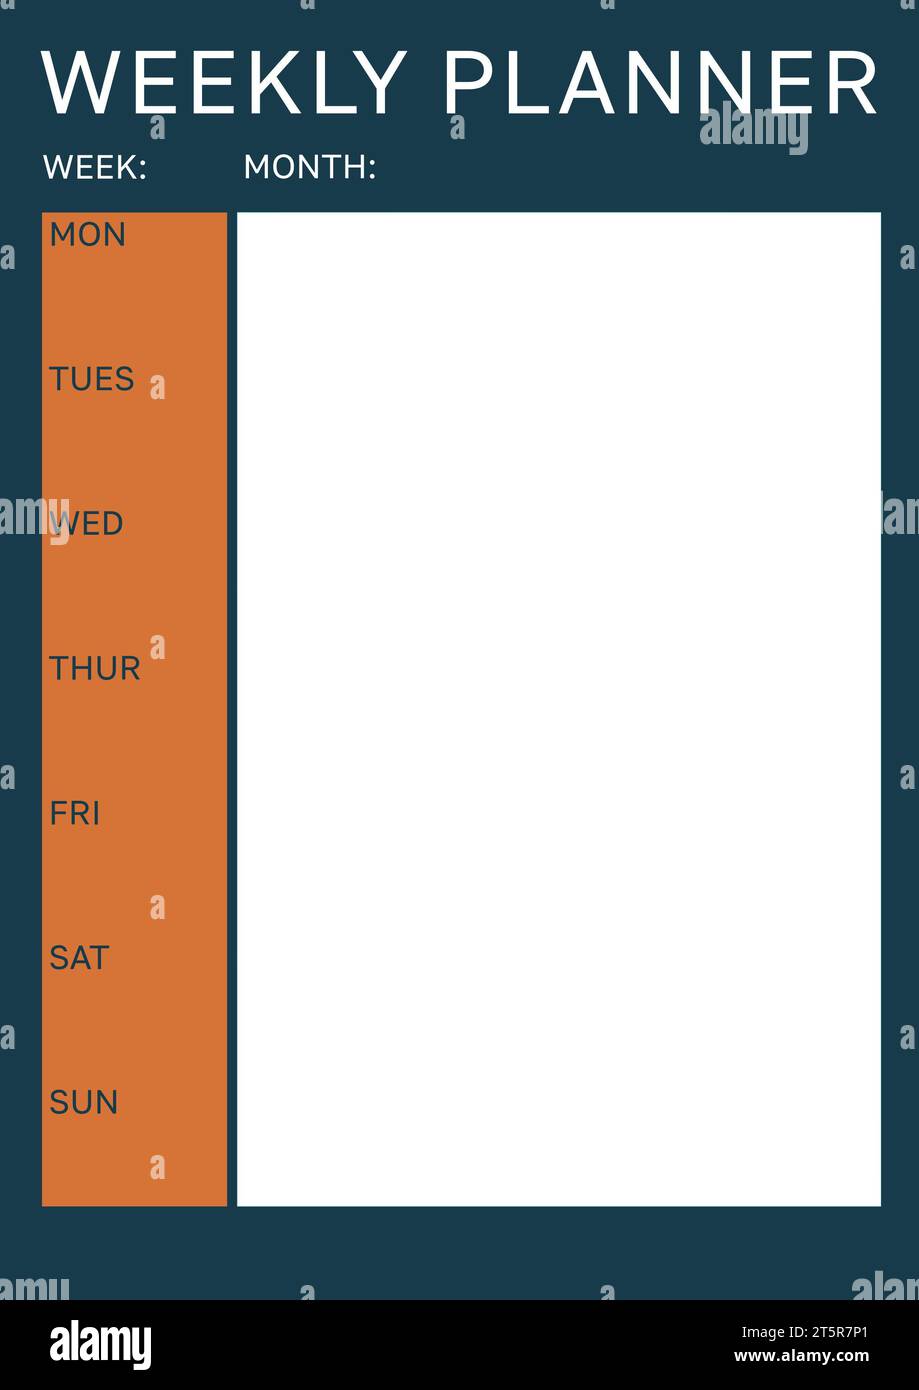 Abbildung: Wochenplaner, Woche, Monat, Monat, Monat, dienstag, mi, do, fr, Sa, Sonntag Text mit leerem Feld Stockfoto